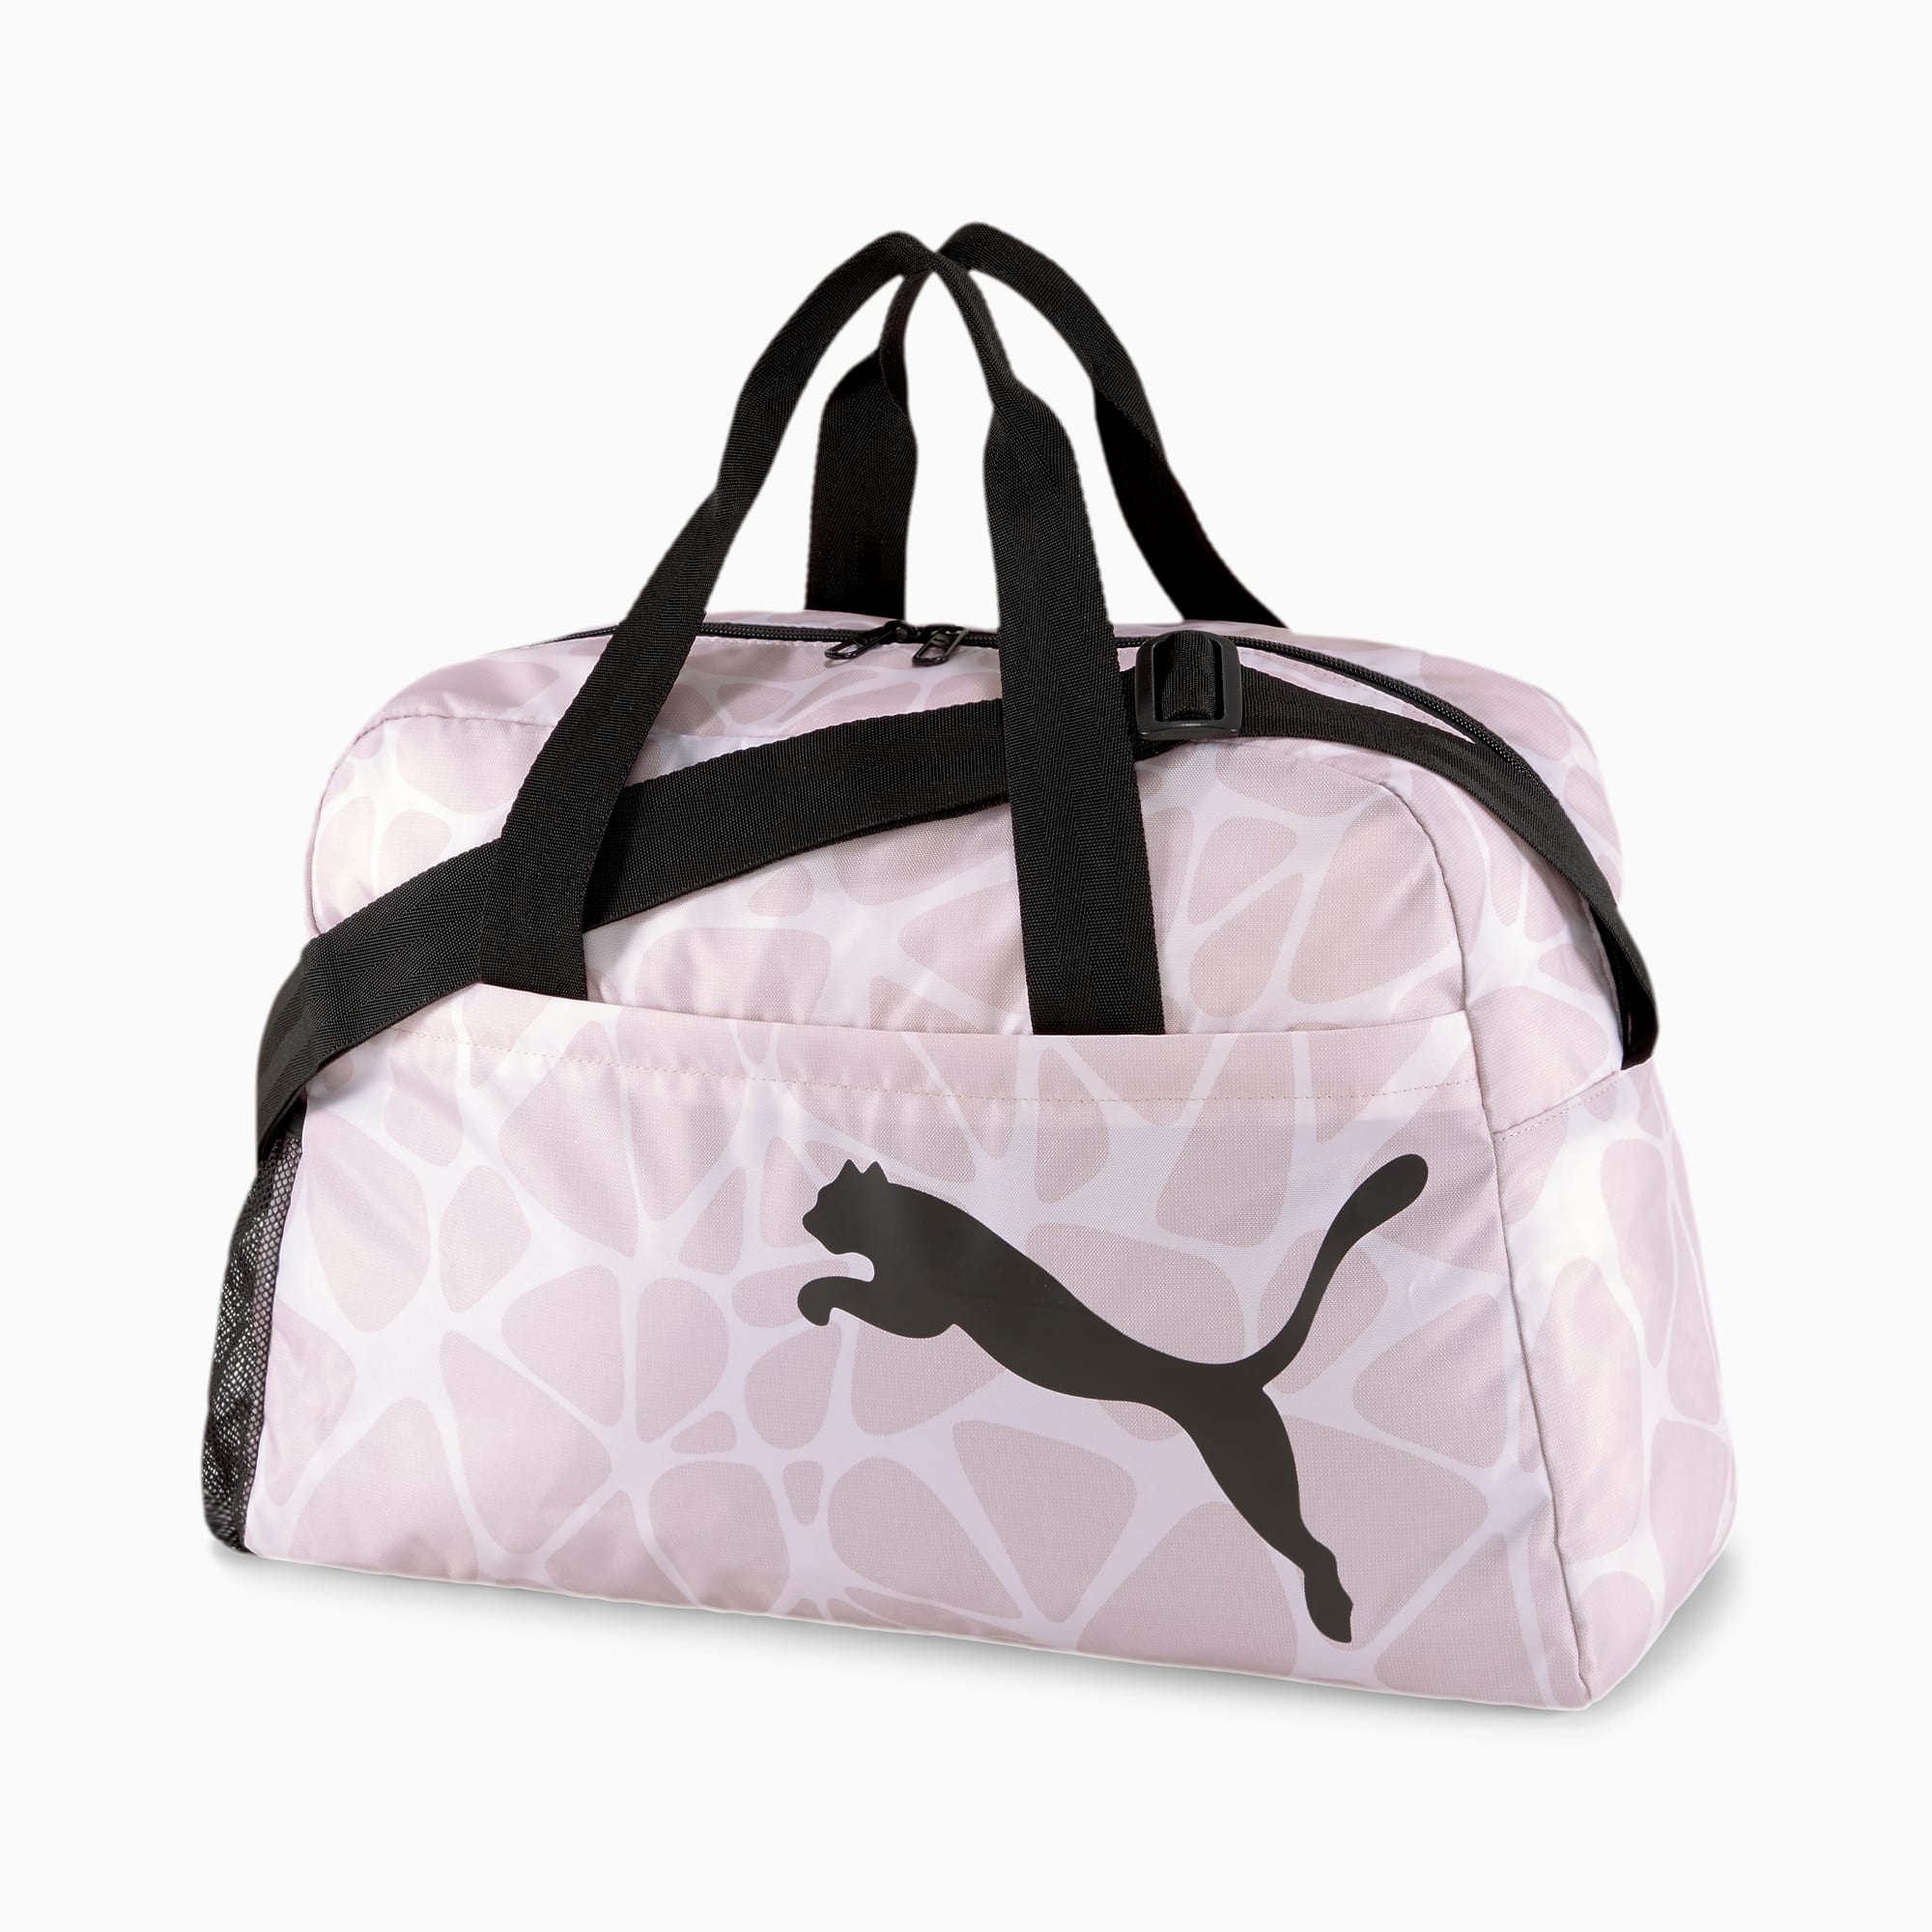 puma workout grip bag